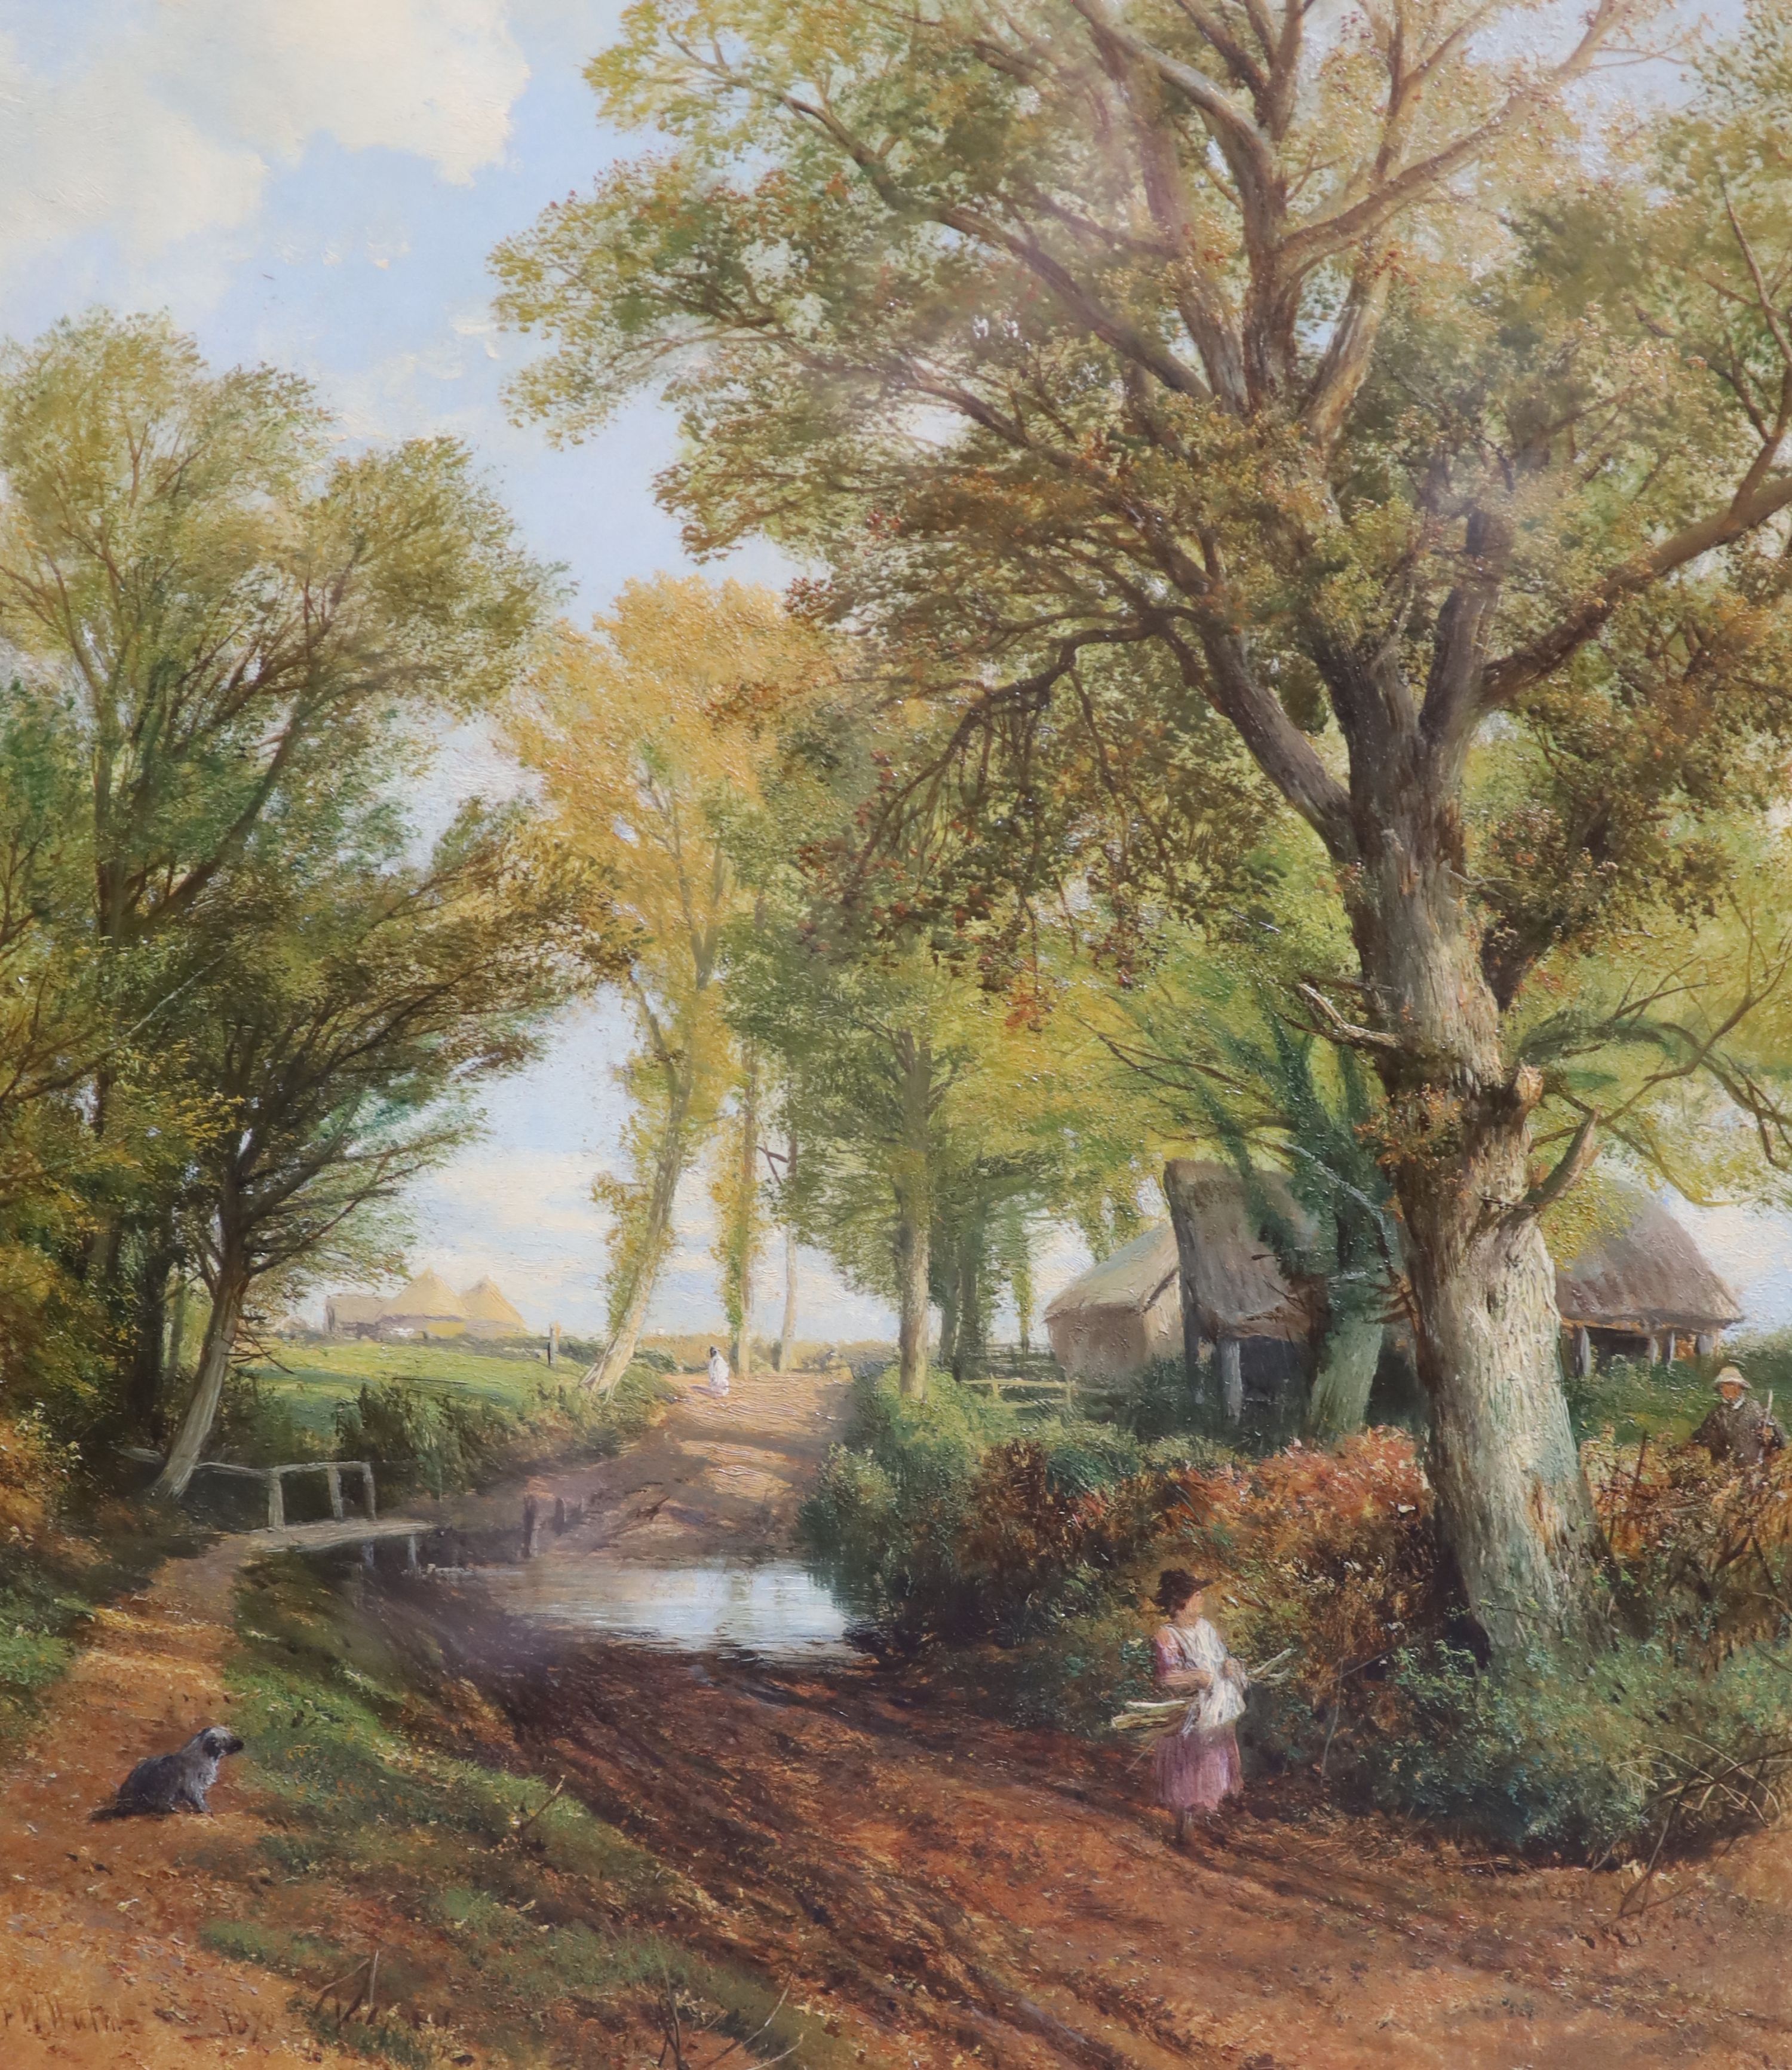 Frederick W Hulme, A Shady Glade & The Road to the Farm, Oil on board, 35 x 30 cm.